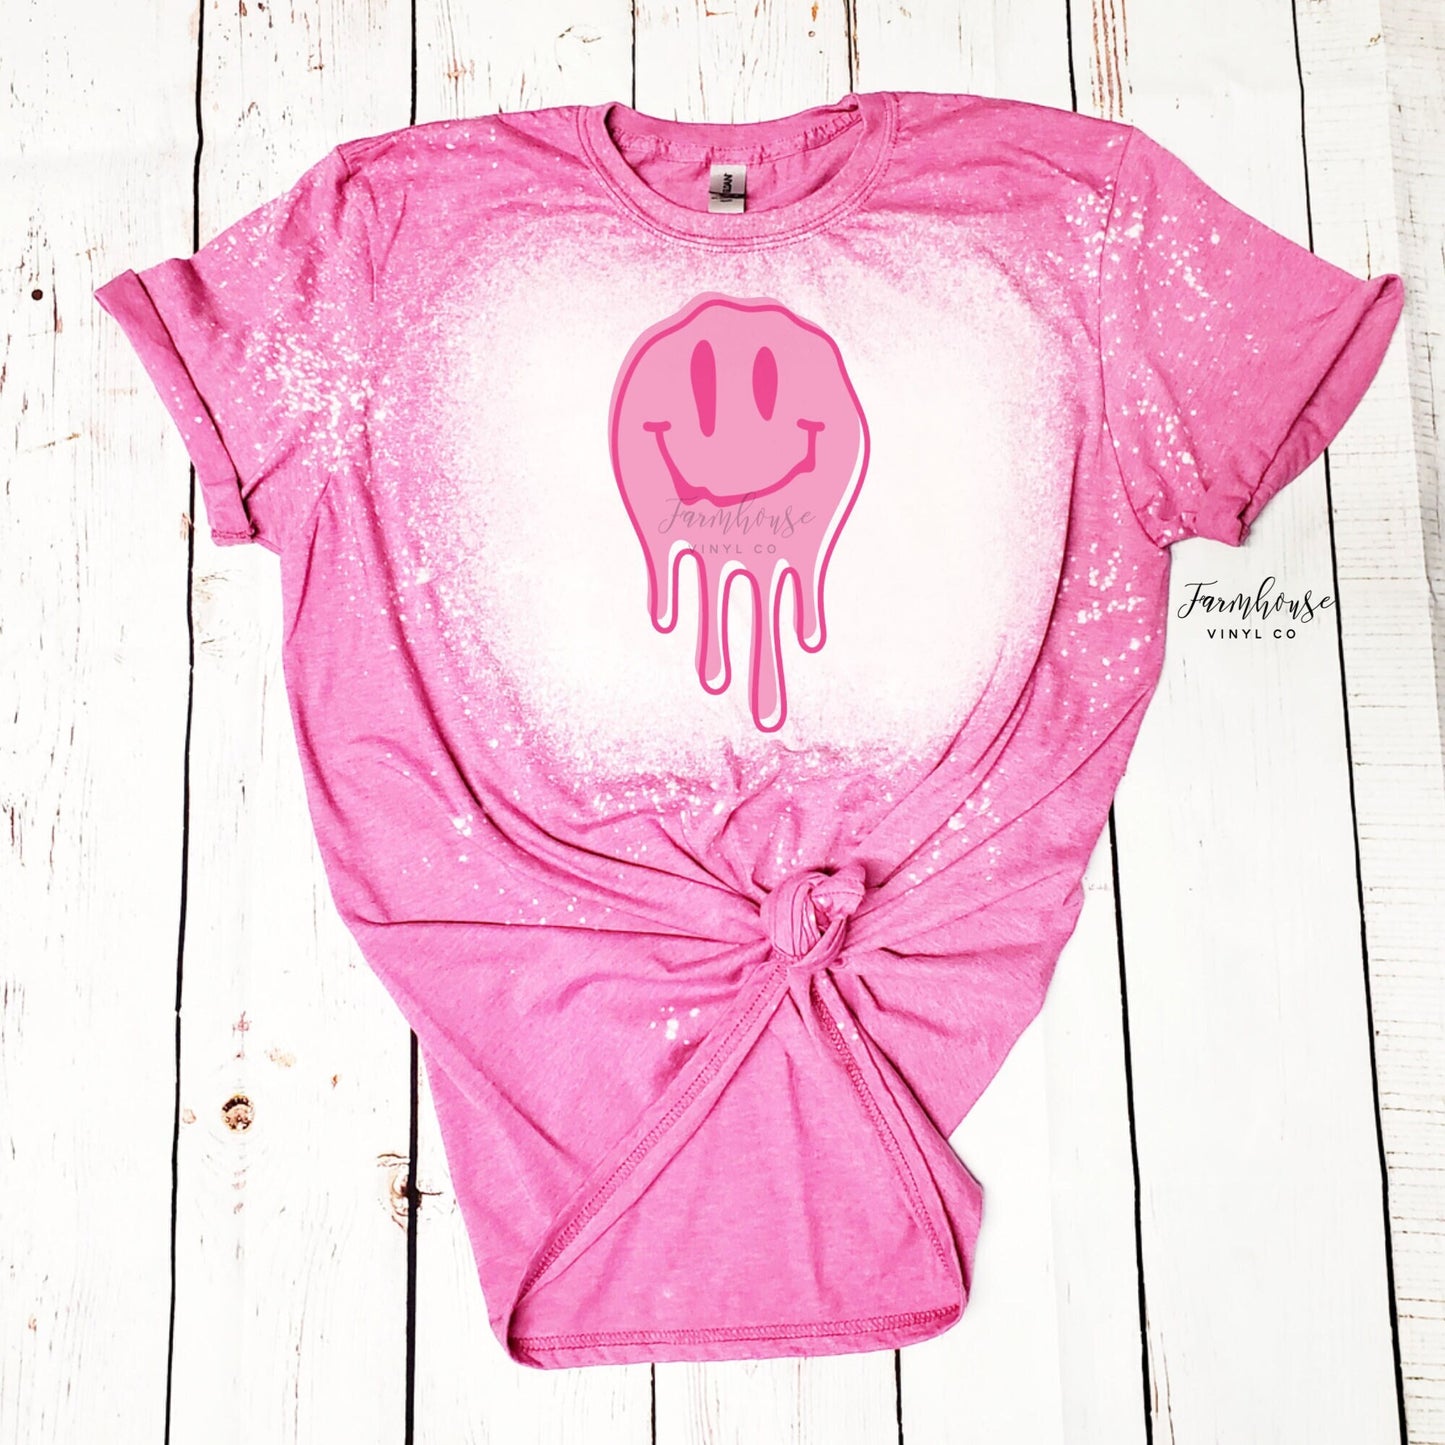 Pink Smiley Retro Tee Shirt / Boho Hippie Sweatshirt Tee / Retro Smiley Face / Hippie Tie Dye / Trendy Retro T Shirt / Melting Face Shirt - Farmhouse Vinyl Co